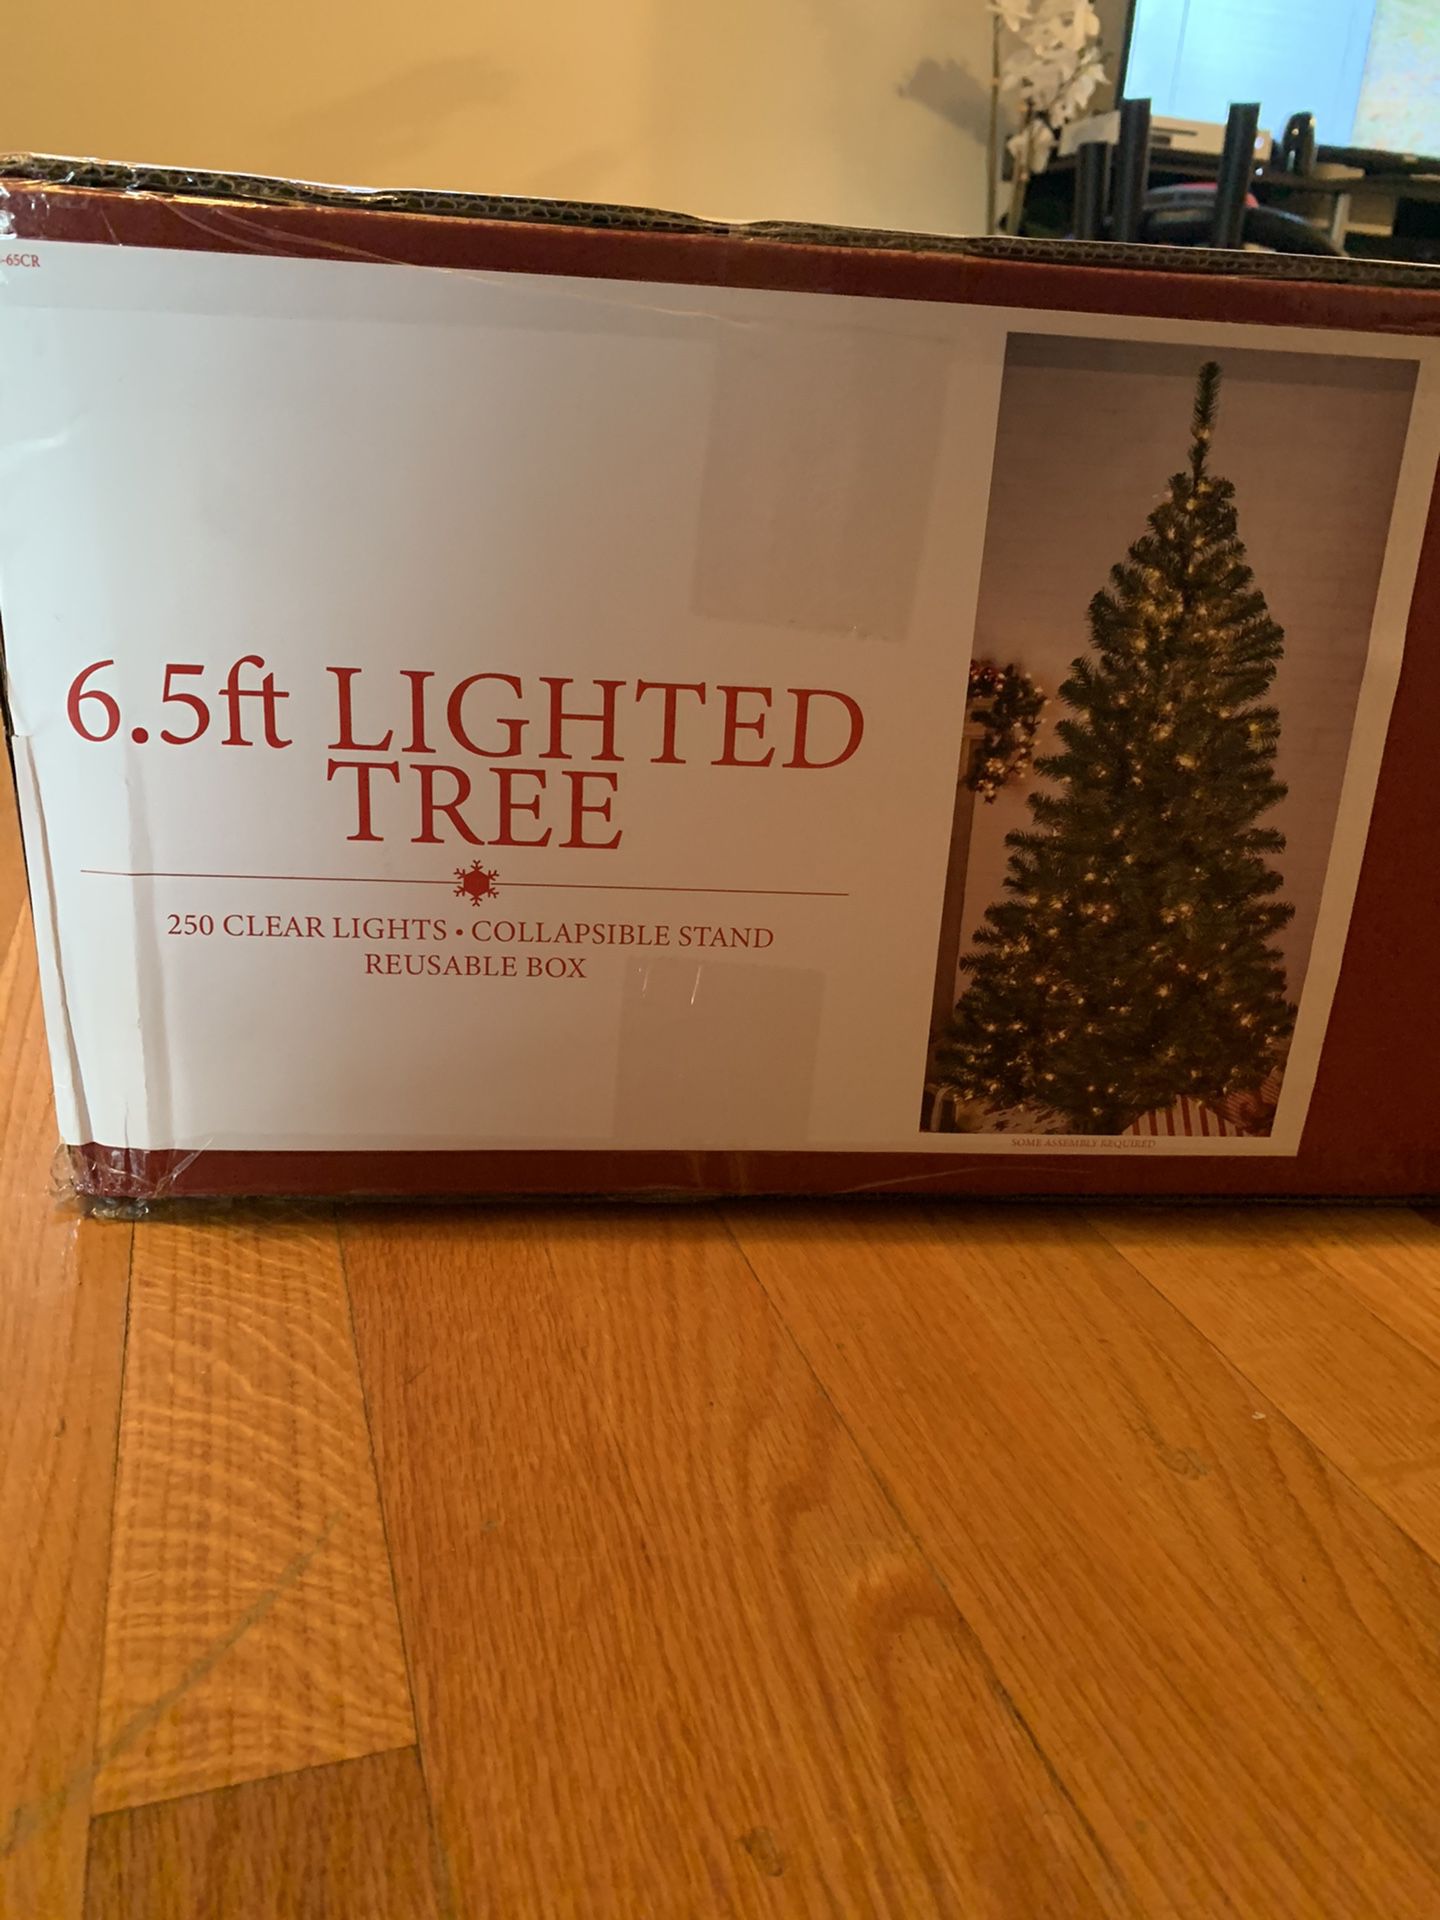 6.5 ft Lighted Christmas Tree $35